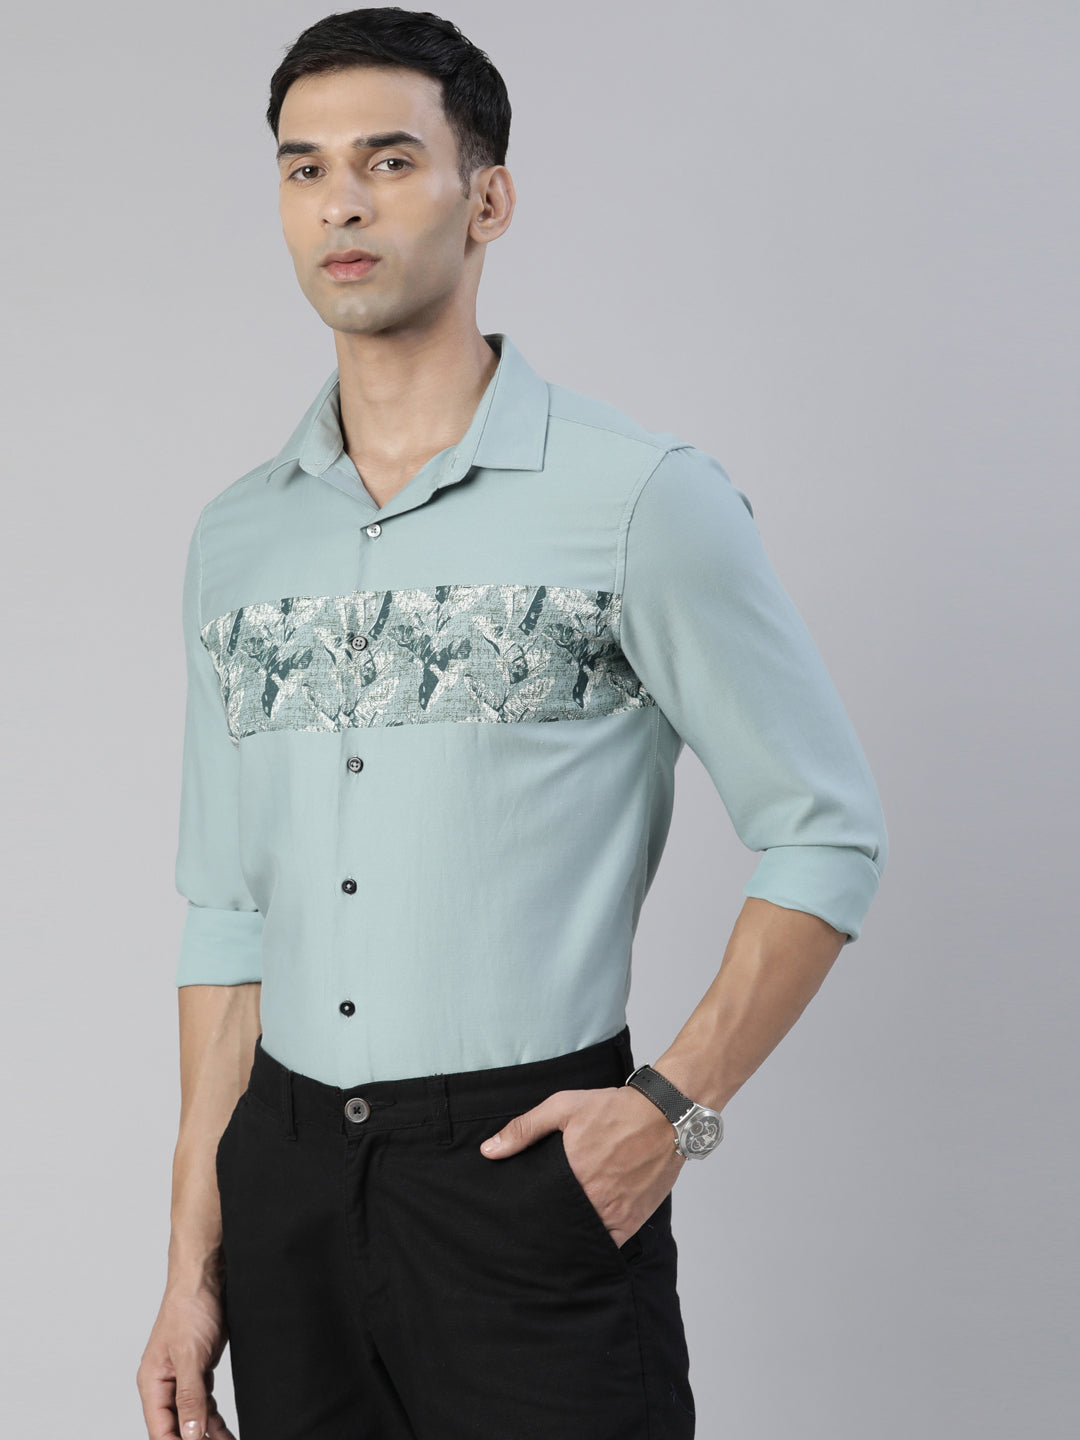 Fascia Turquoise Panel Printed Shirt Panel Printed Shirt Bushirt   